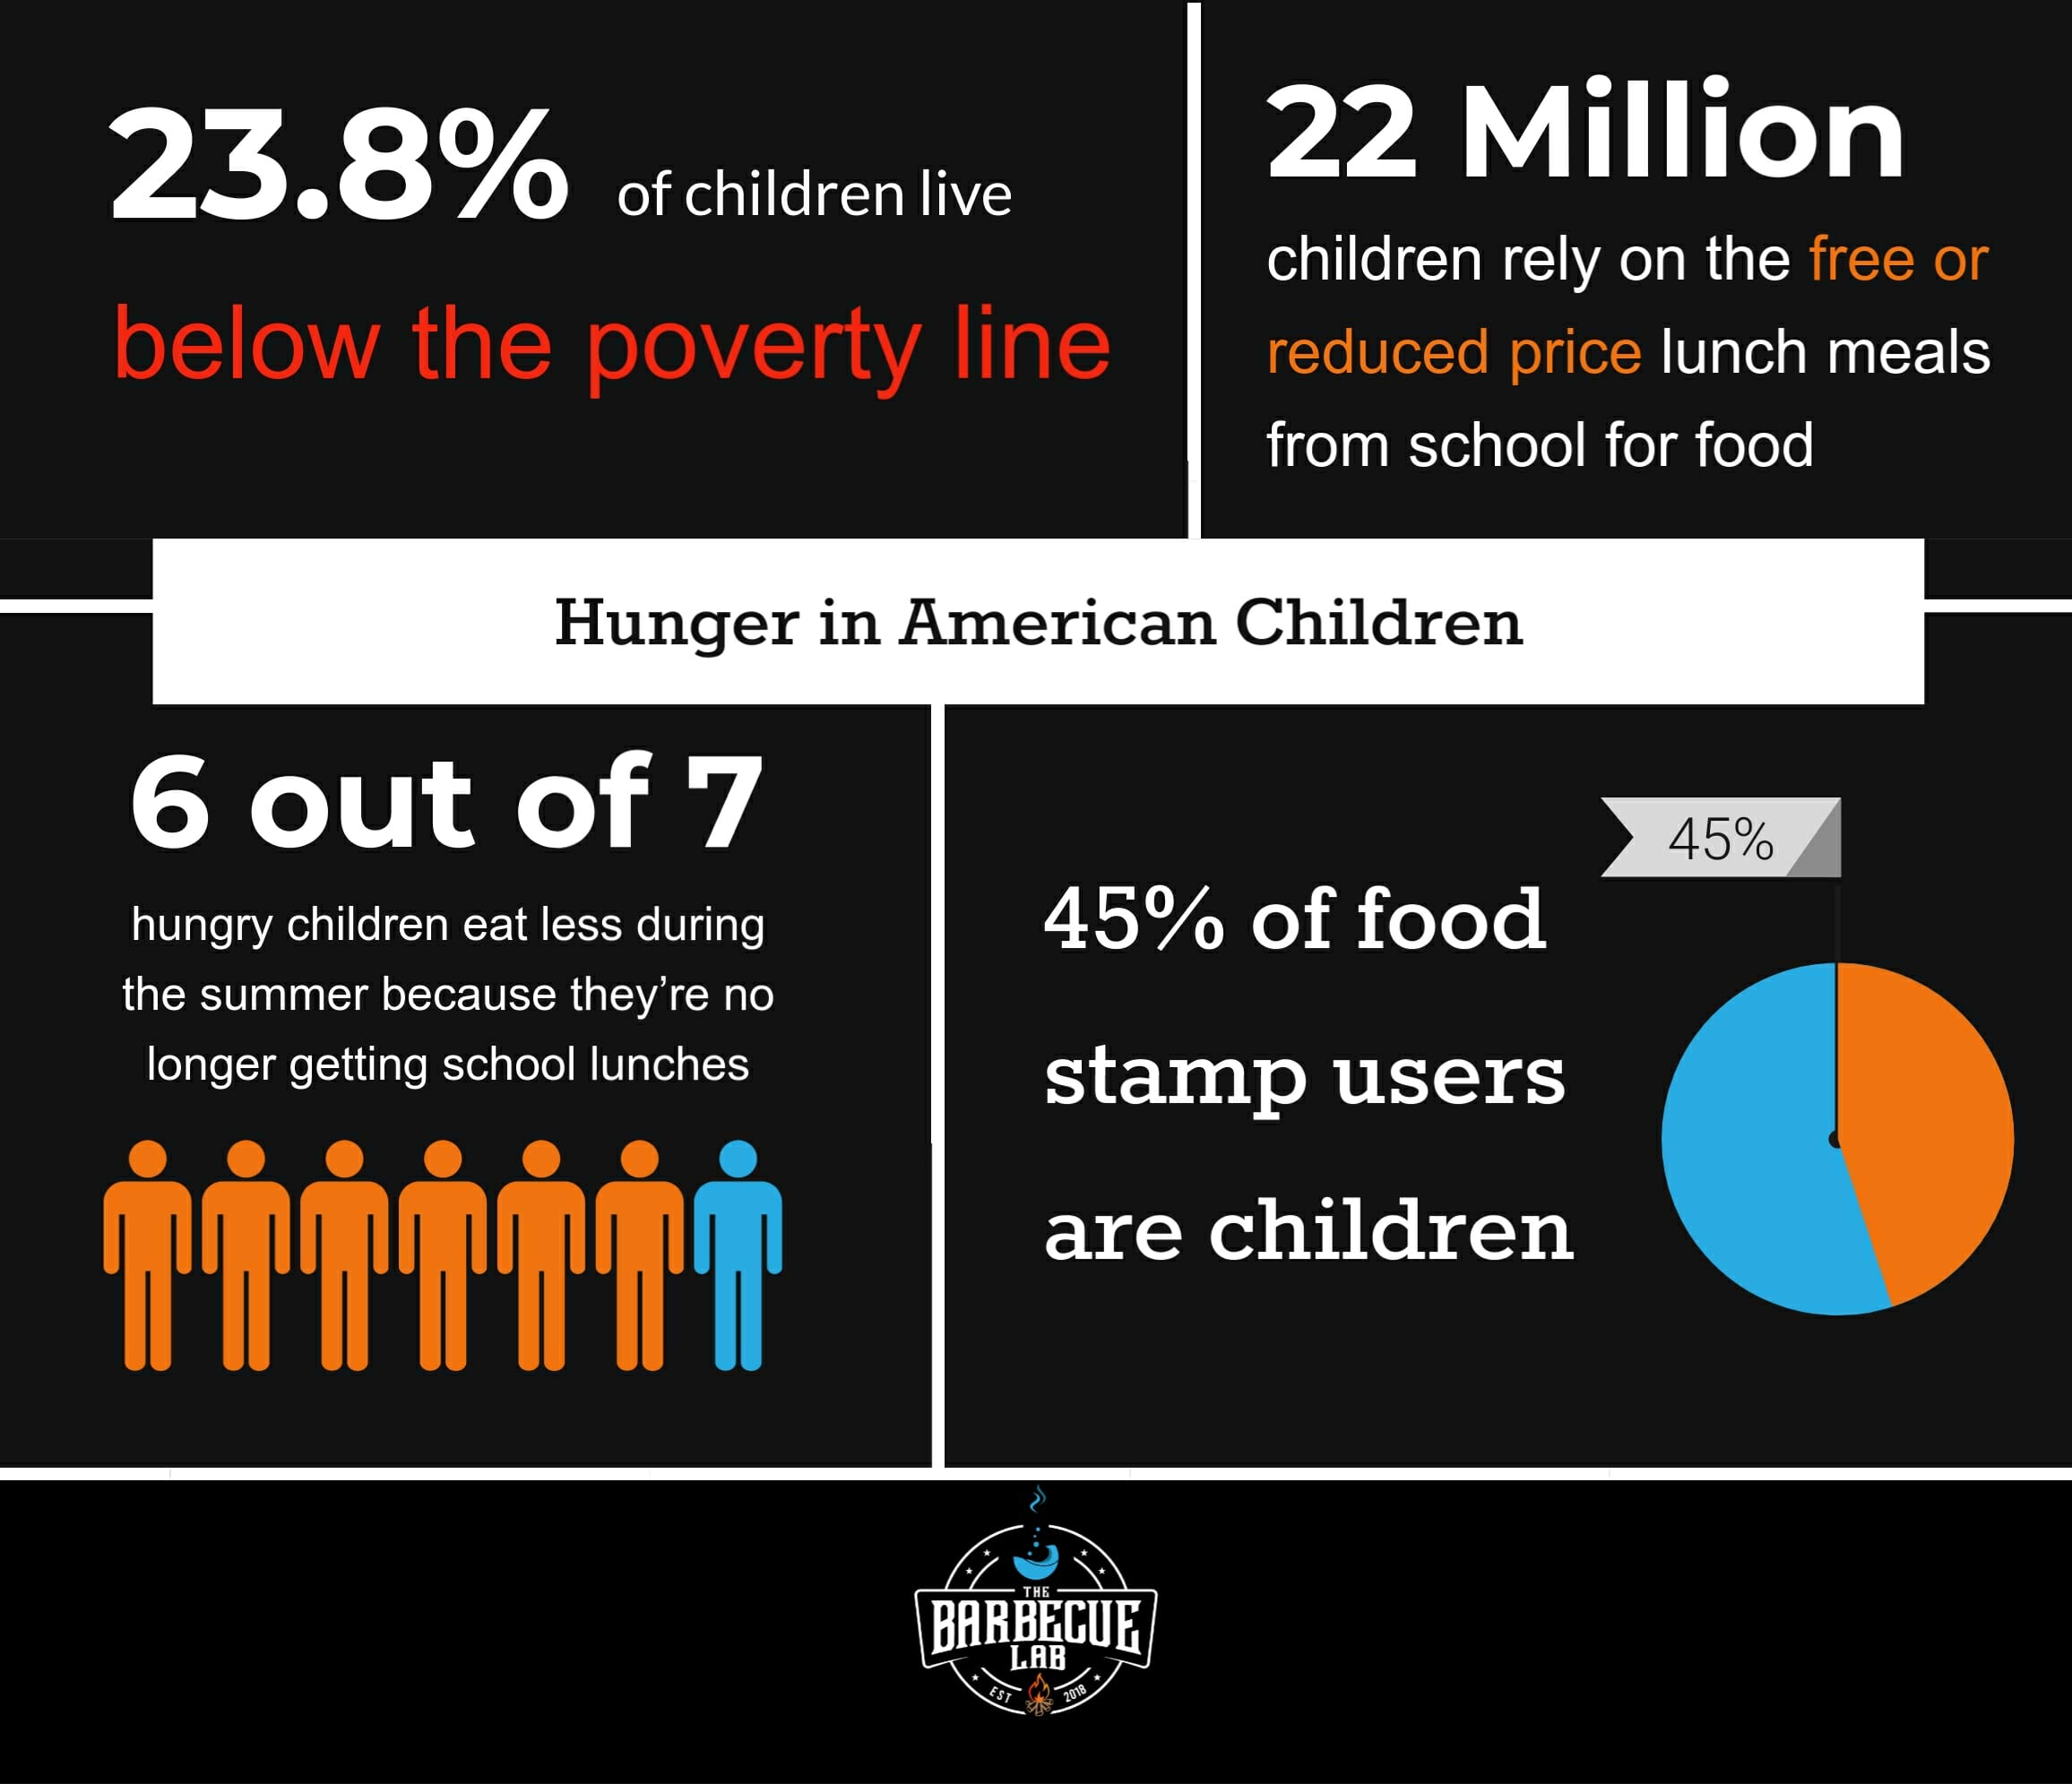 Hunger in American Children statistics represented visually